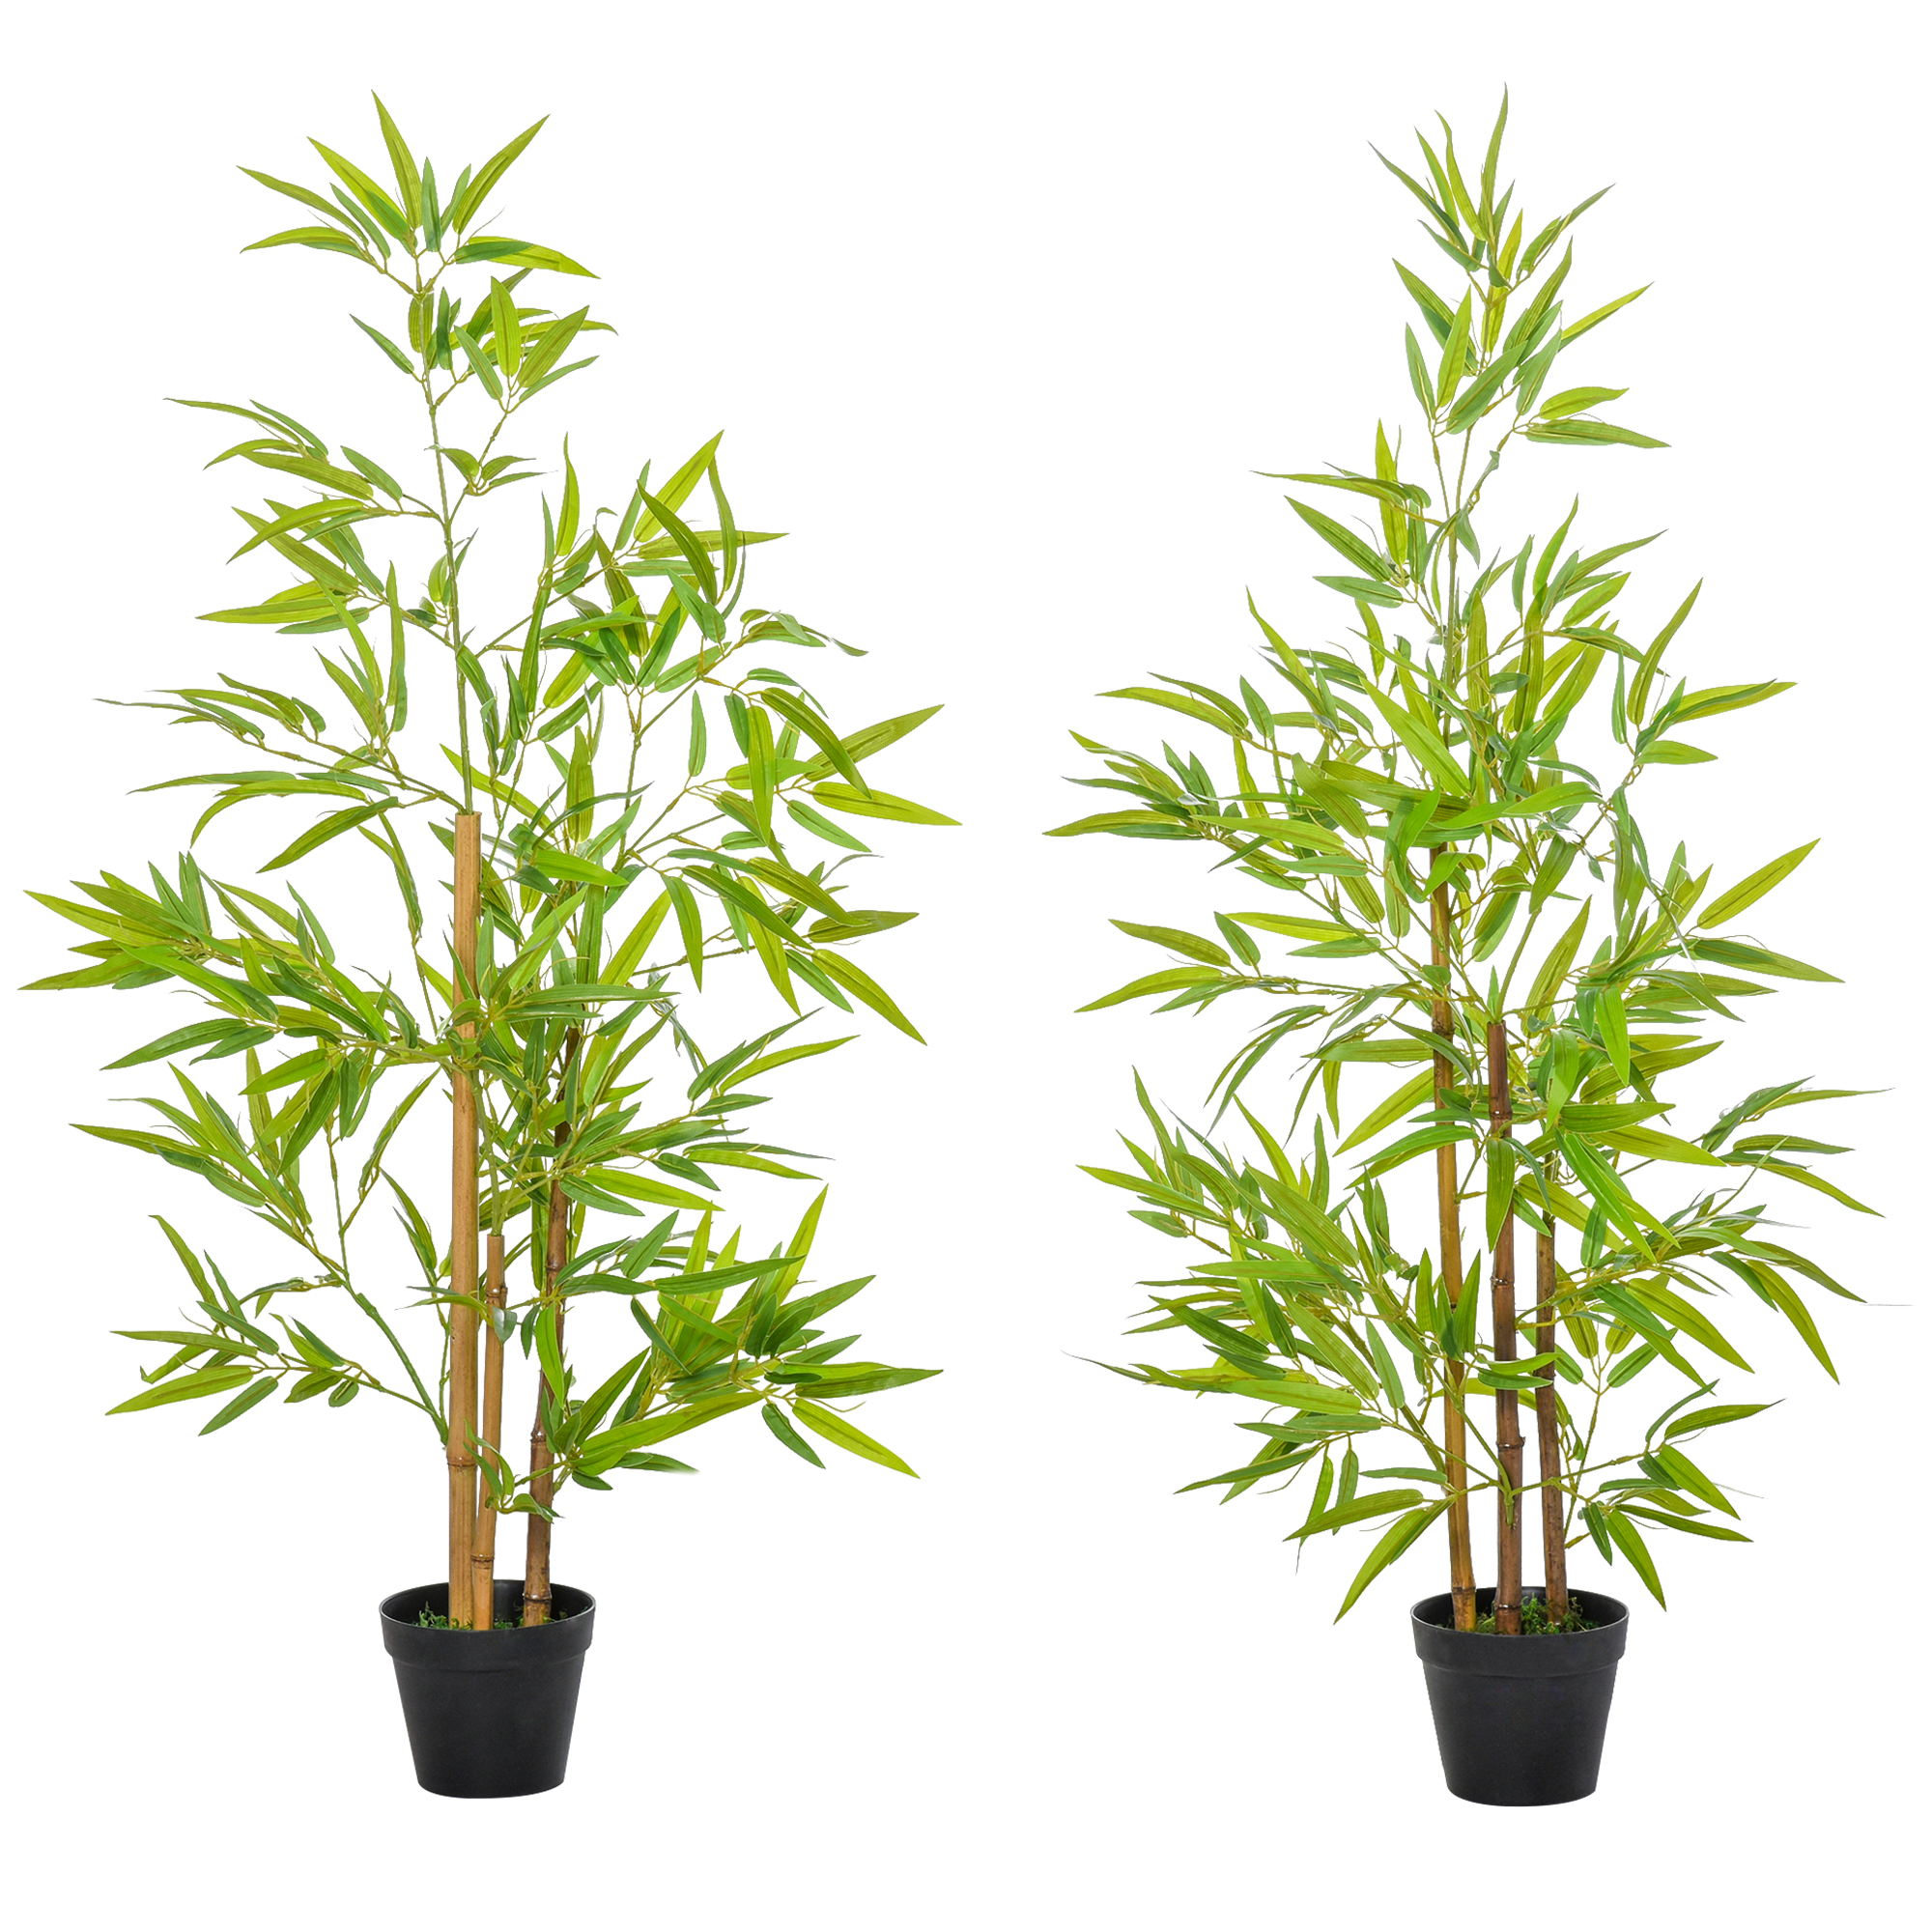 Outsunny Σετ 2 φυτά μπαμπού Τεχνητή σε γλάστρα 120cm για εσωτερικούς και εξωτερικούς χώρους